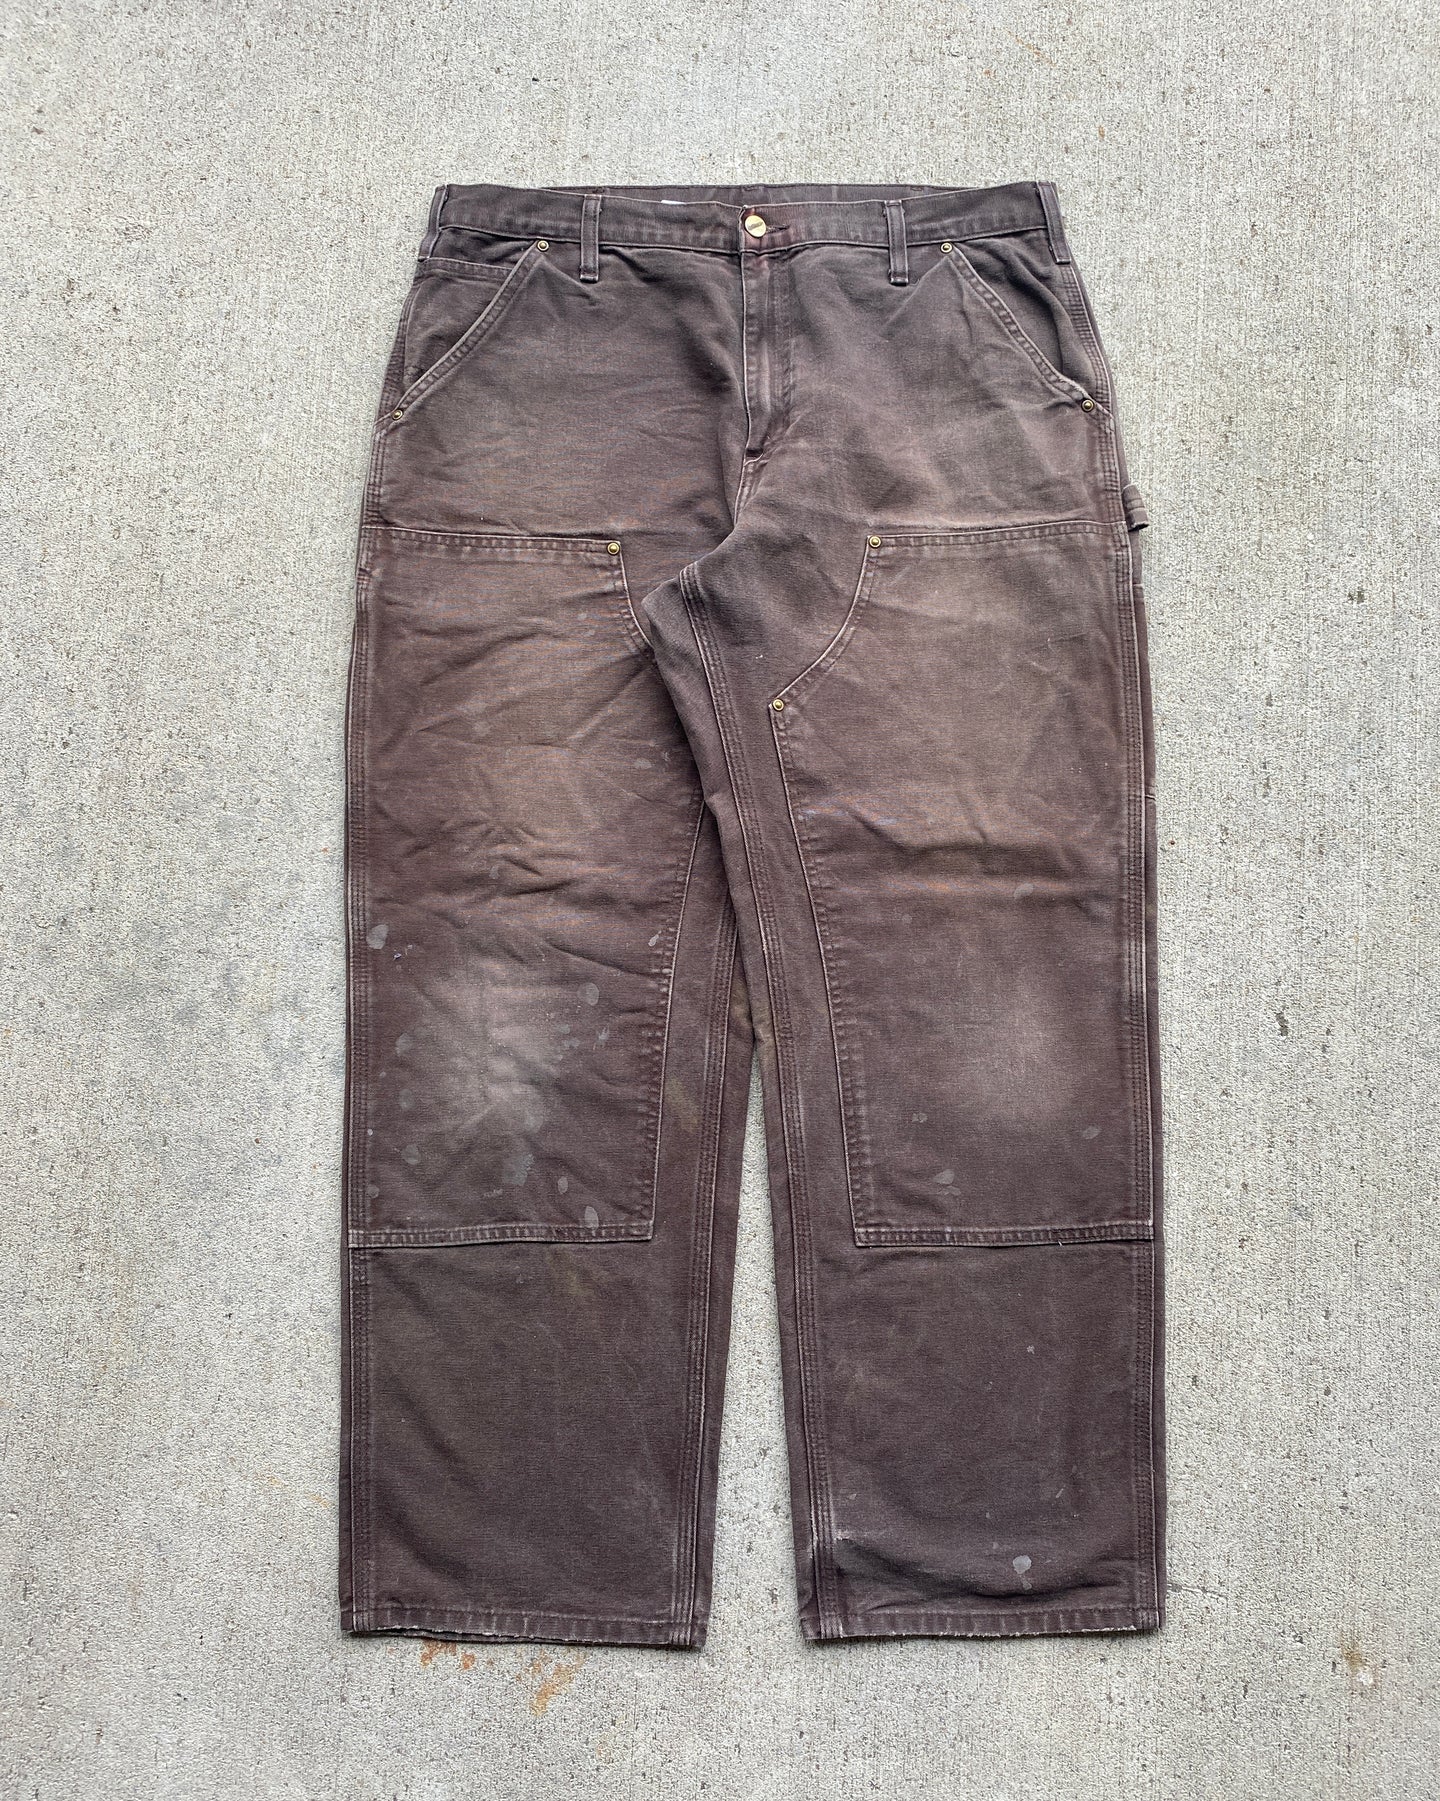 Carhartt Mud Brown Double Knee Work Pants - Size 36 x 30